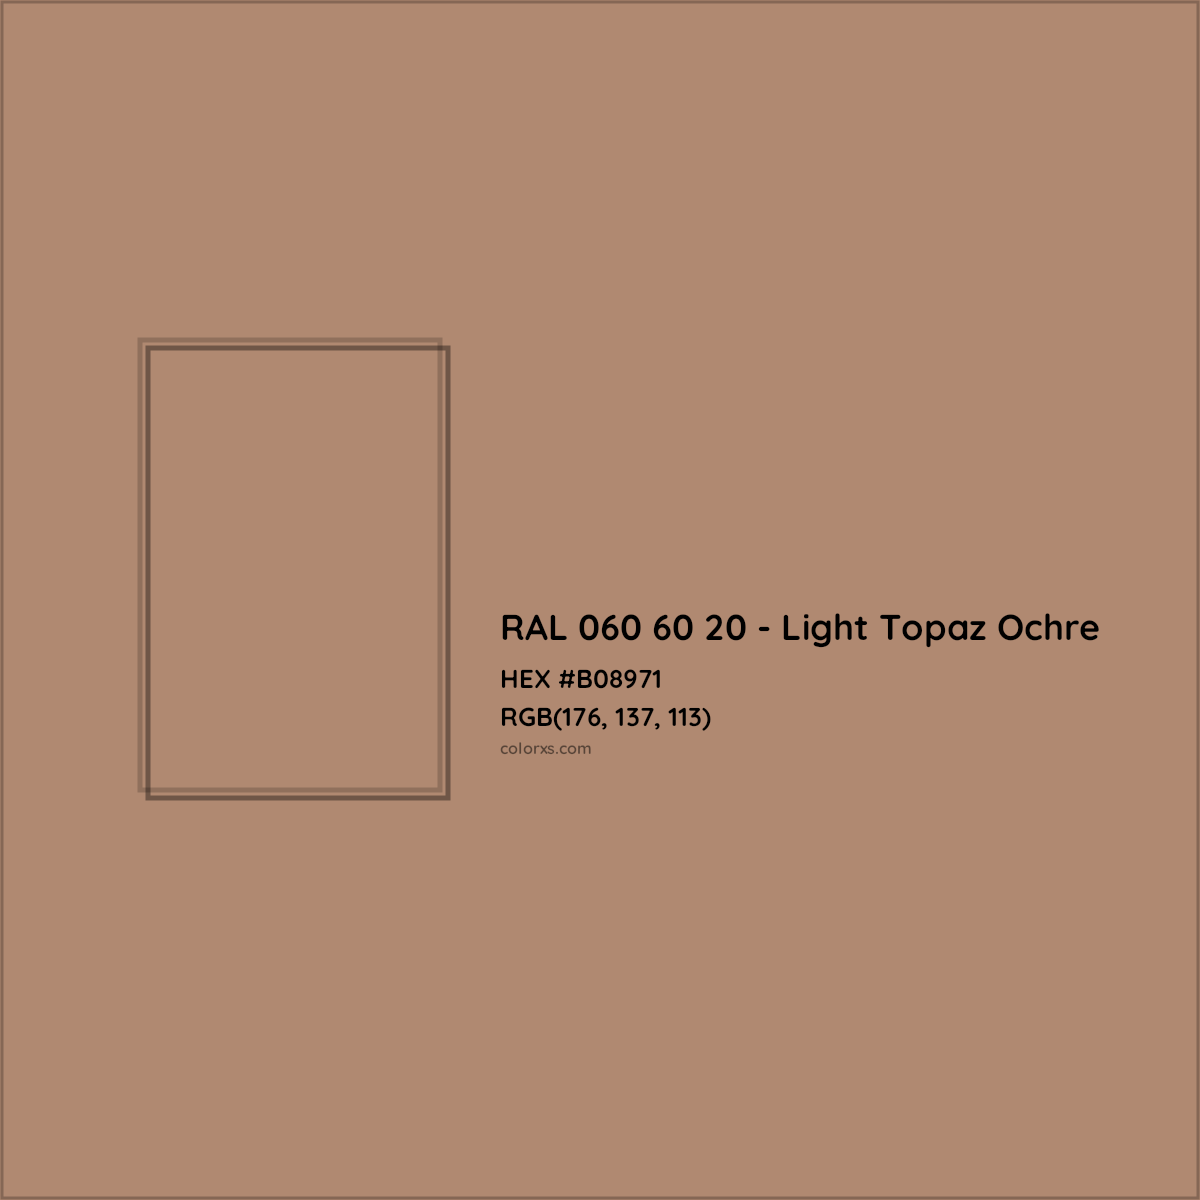 HEX #B08971 RAL 060 60 20 - Light Topaz Ochre CMS RAL Design - Color Code